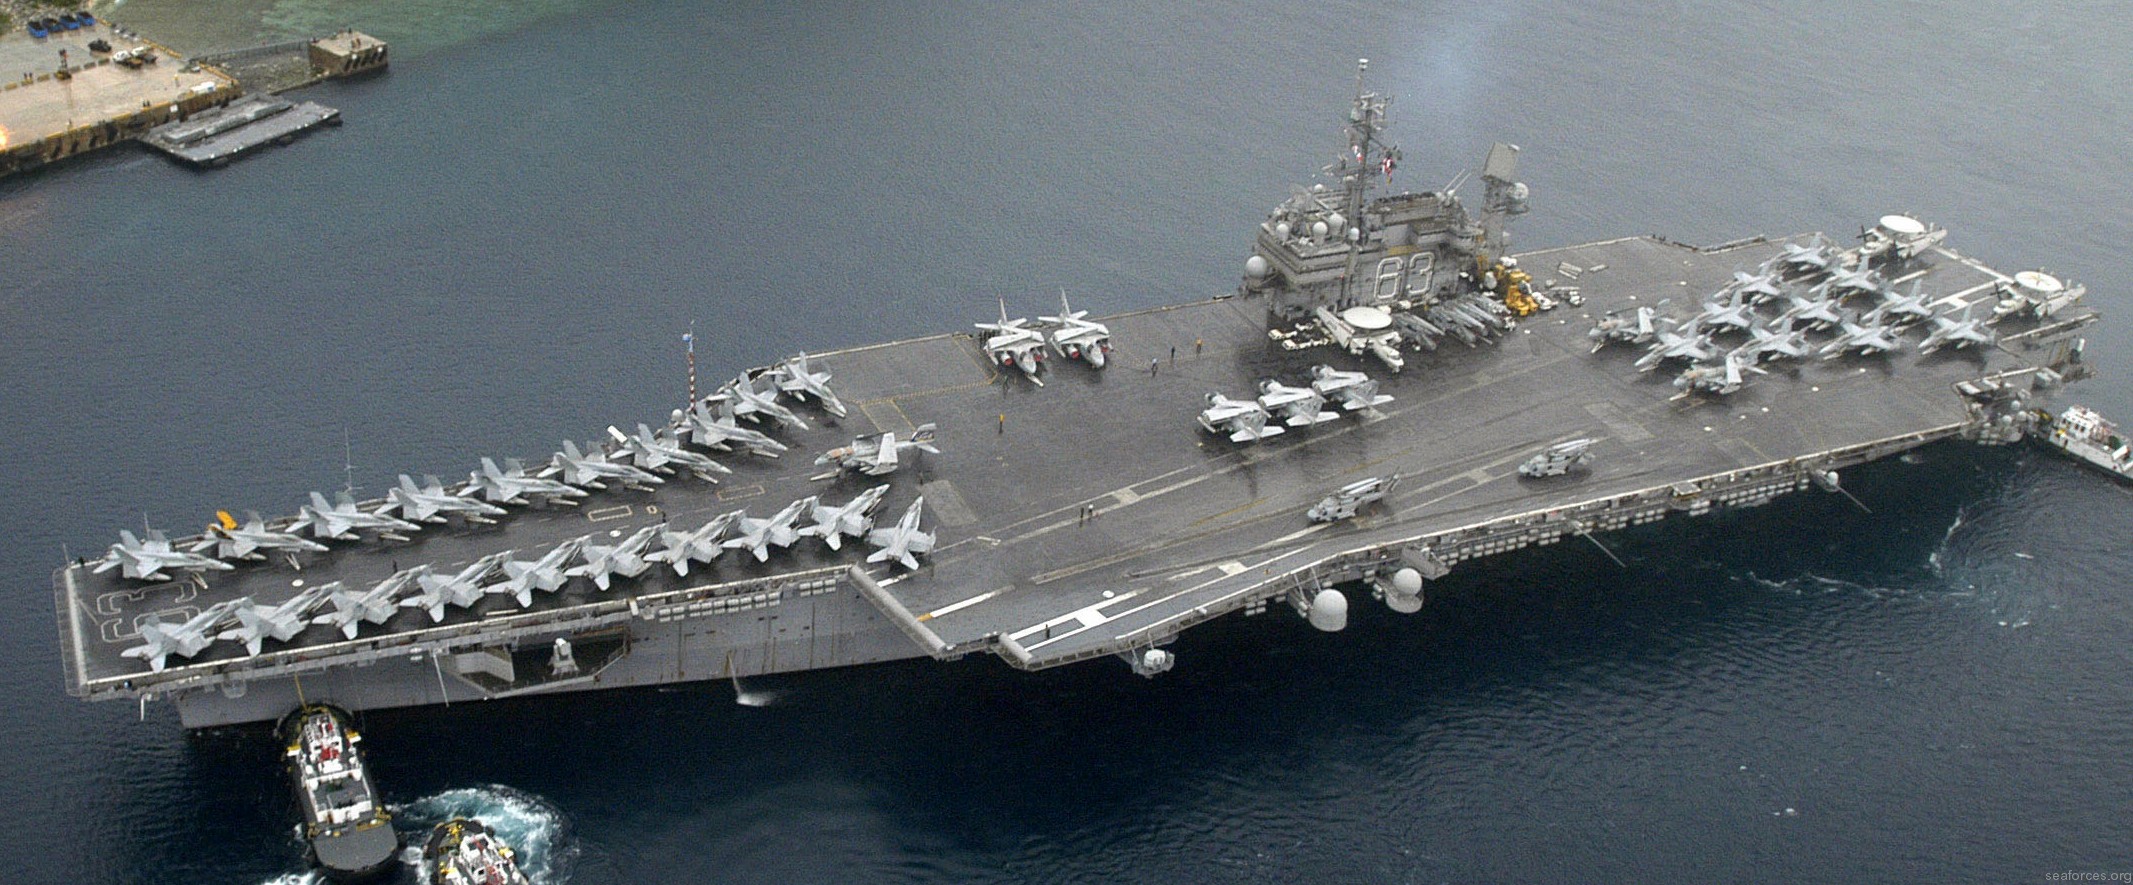 cv-63 uss kitty hawk aircraft carrier air wing cvw-5 us navy 184 apra harbor guam 2004